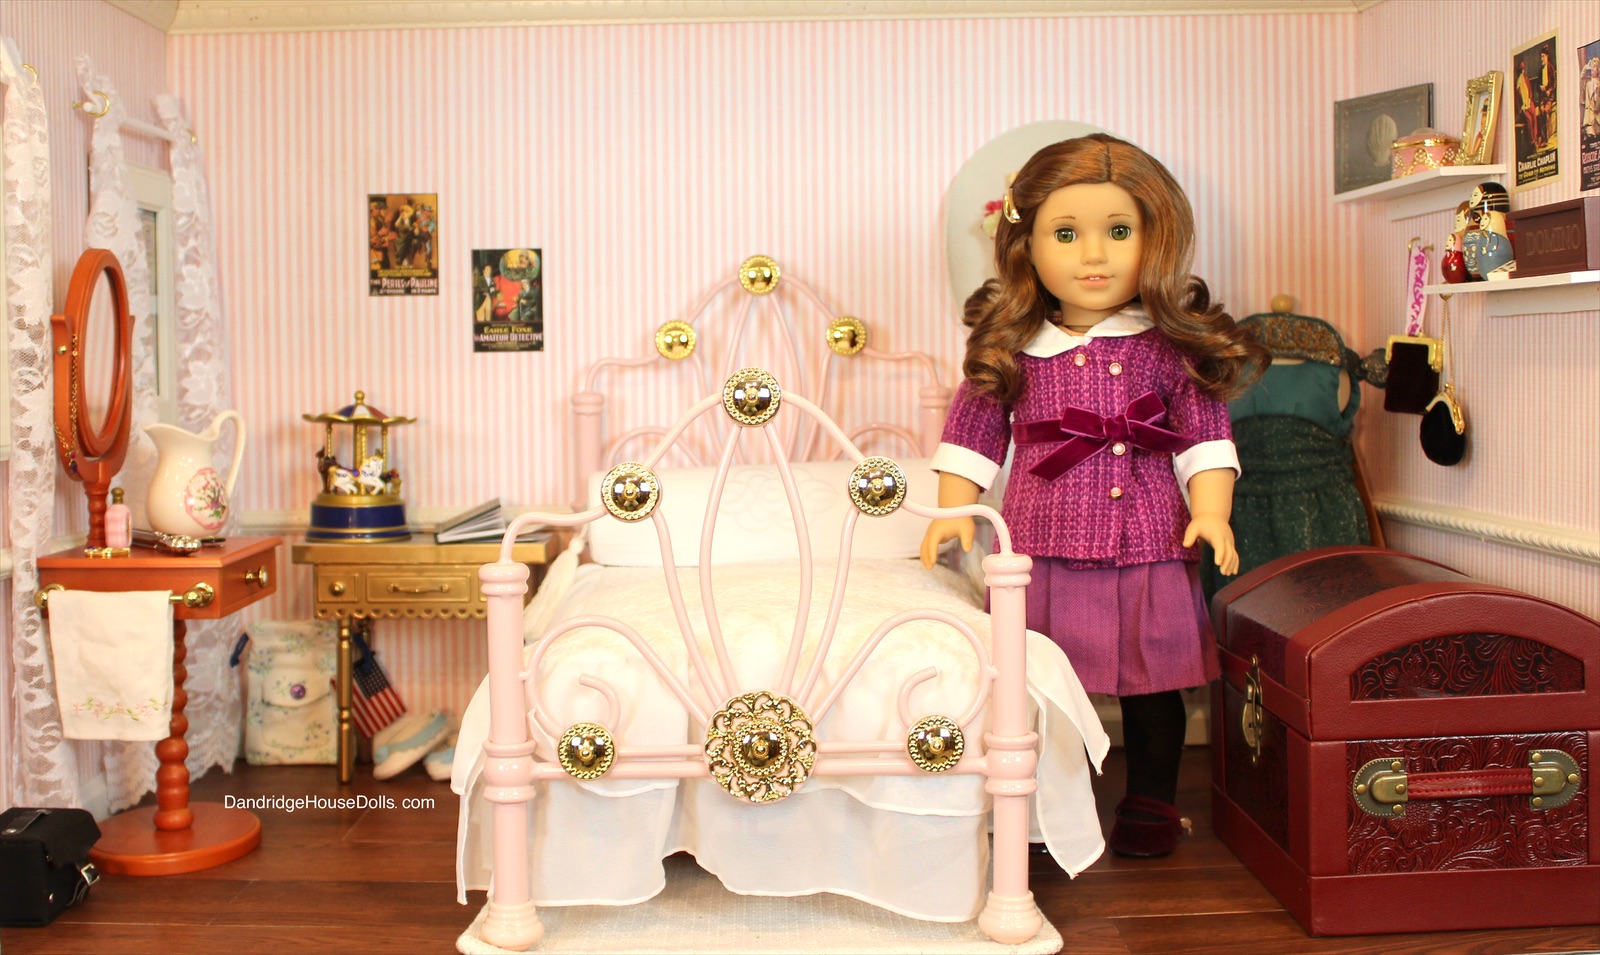 Rebecca's Bedroom. Dandridge House Dolls